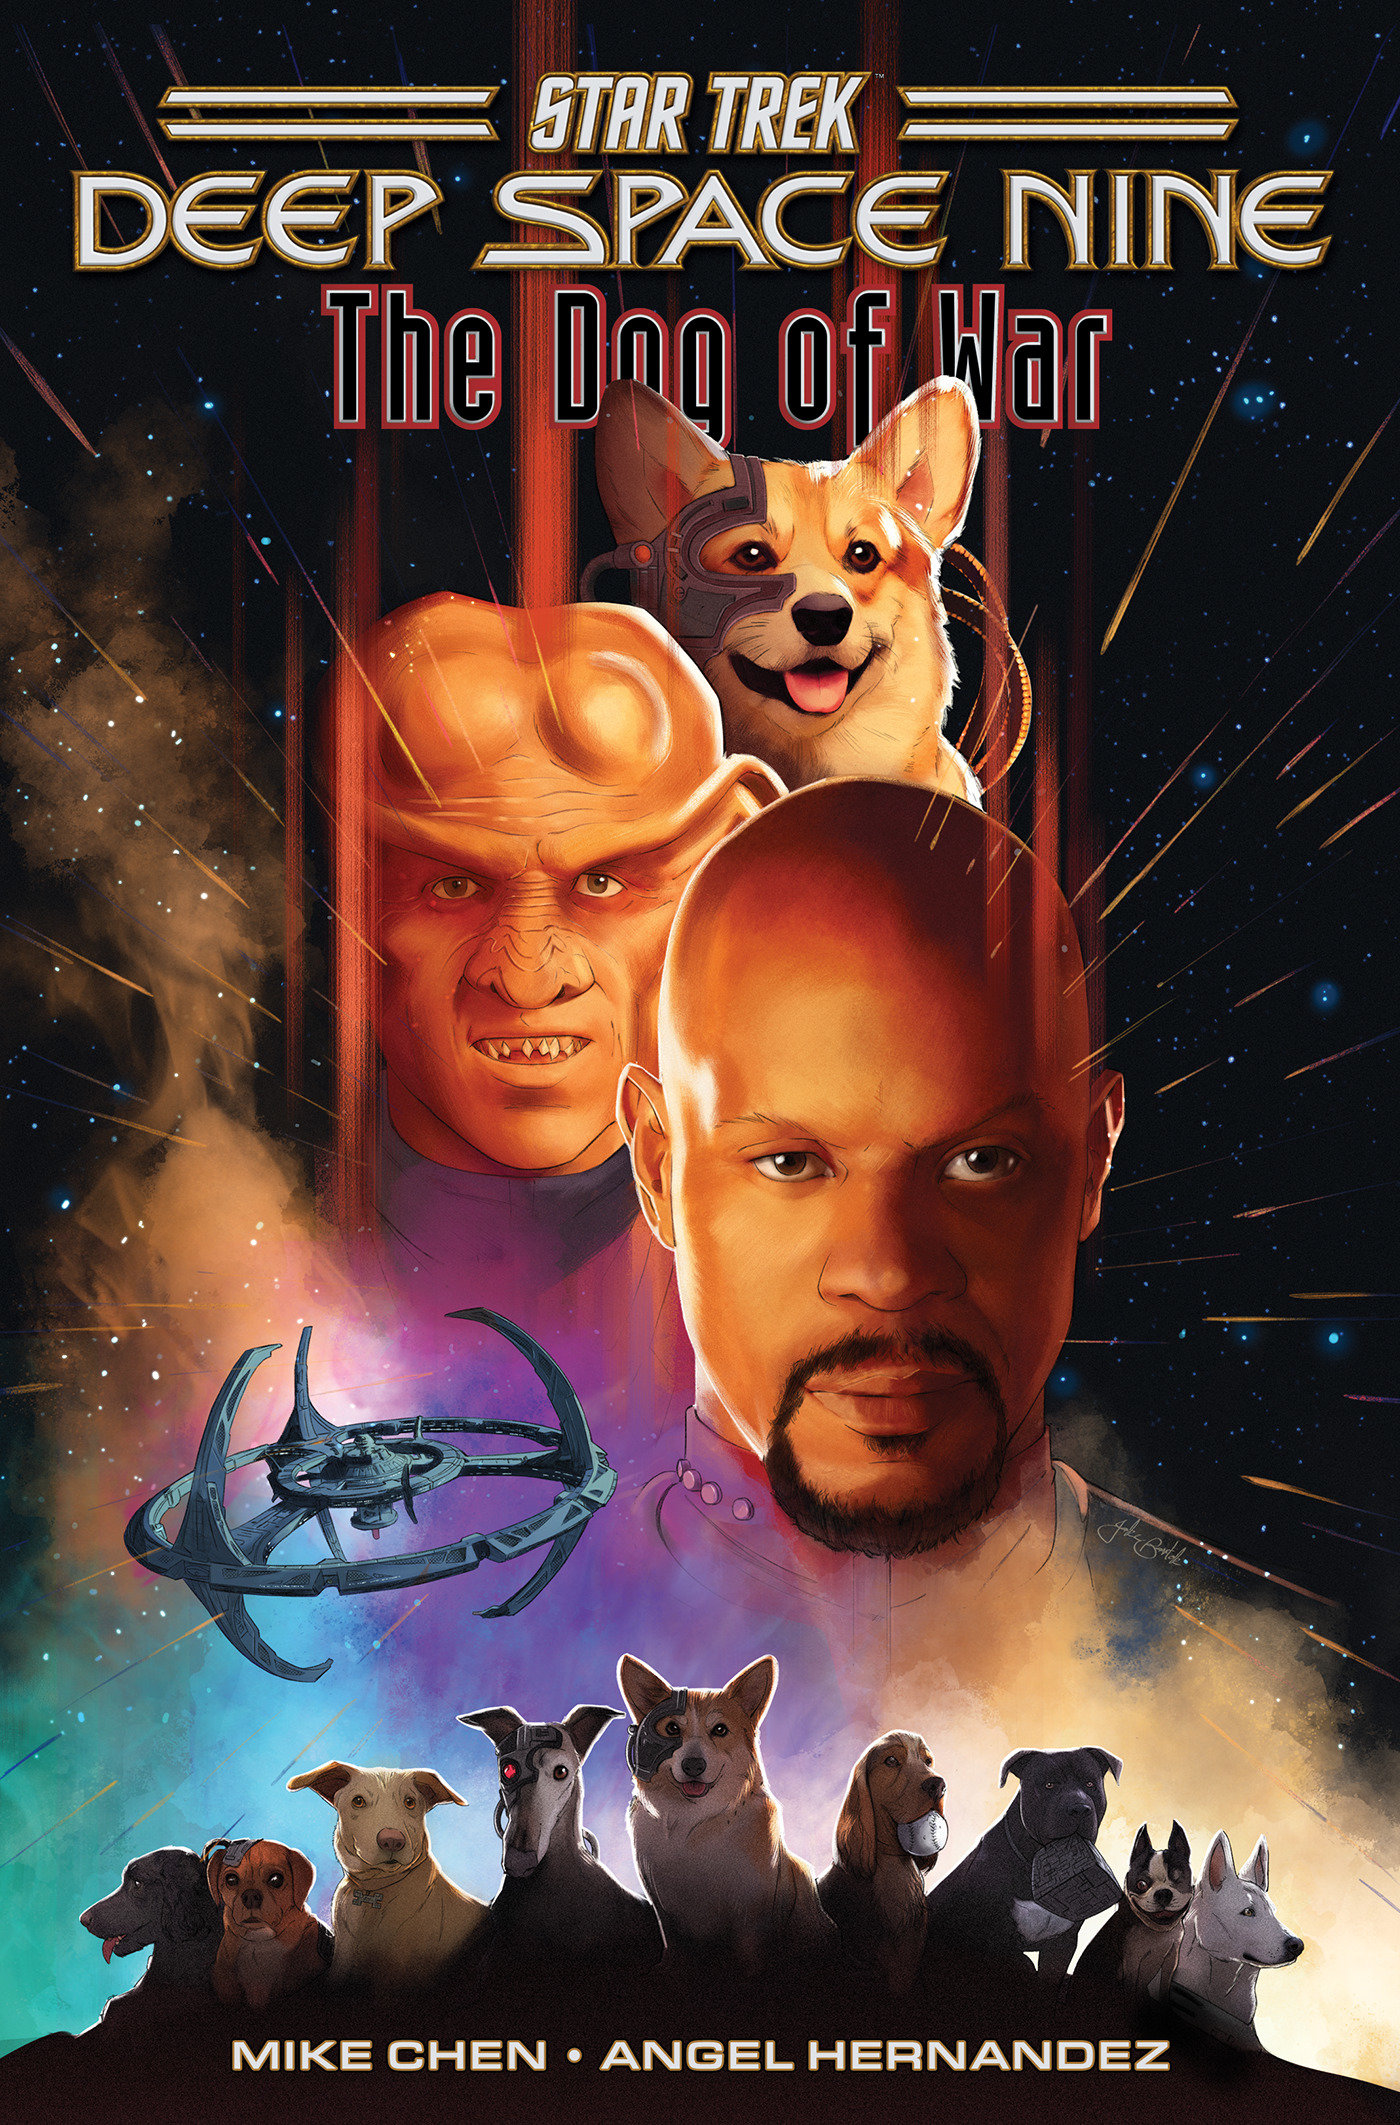 Star Trek Deep Space Nine The Dog of War Graphic Novel